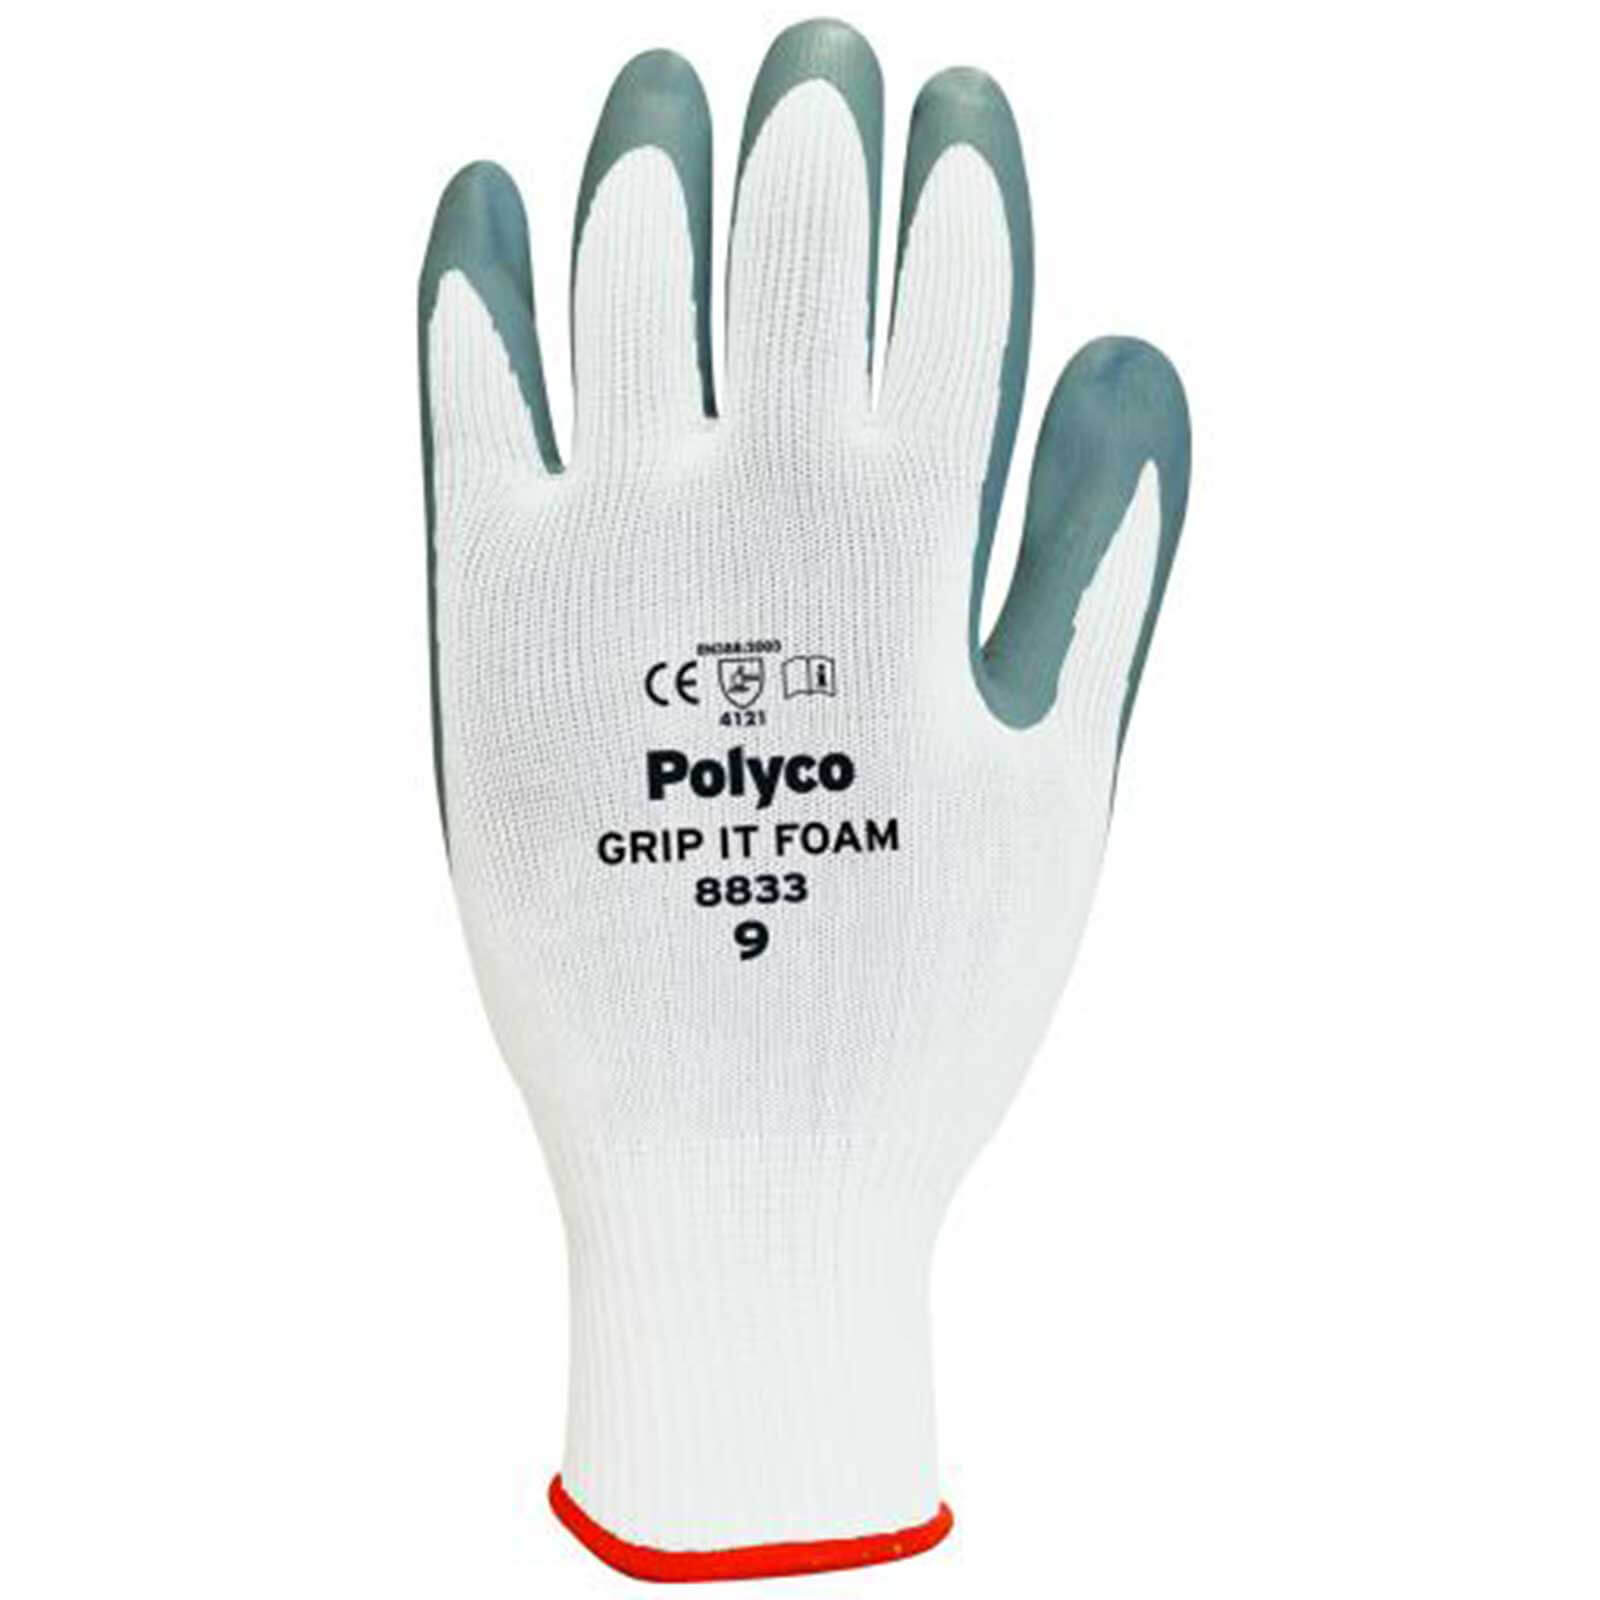 Image of Polyco Grip It Foam Safety Nitrile Gloves L